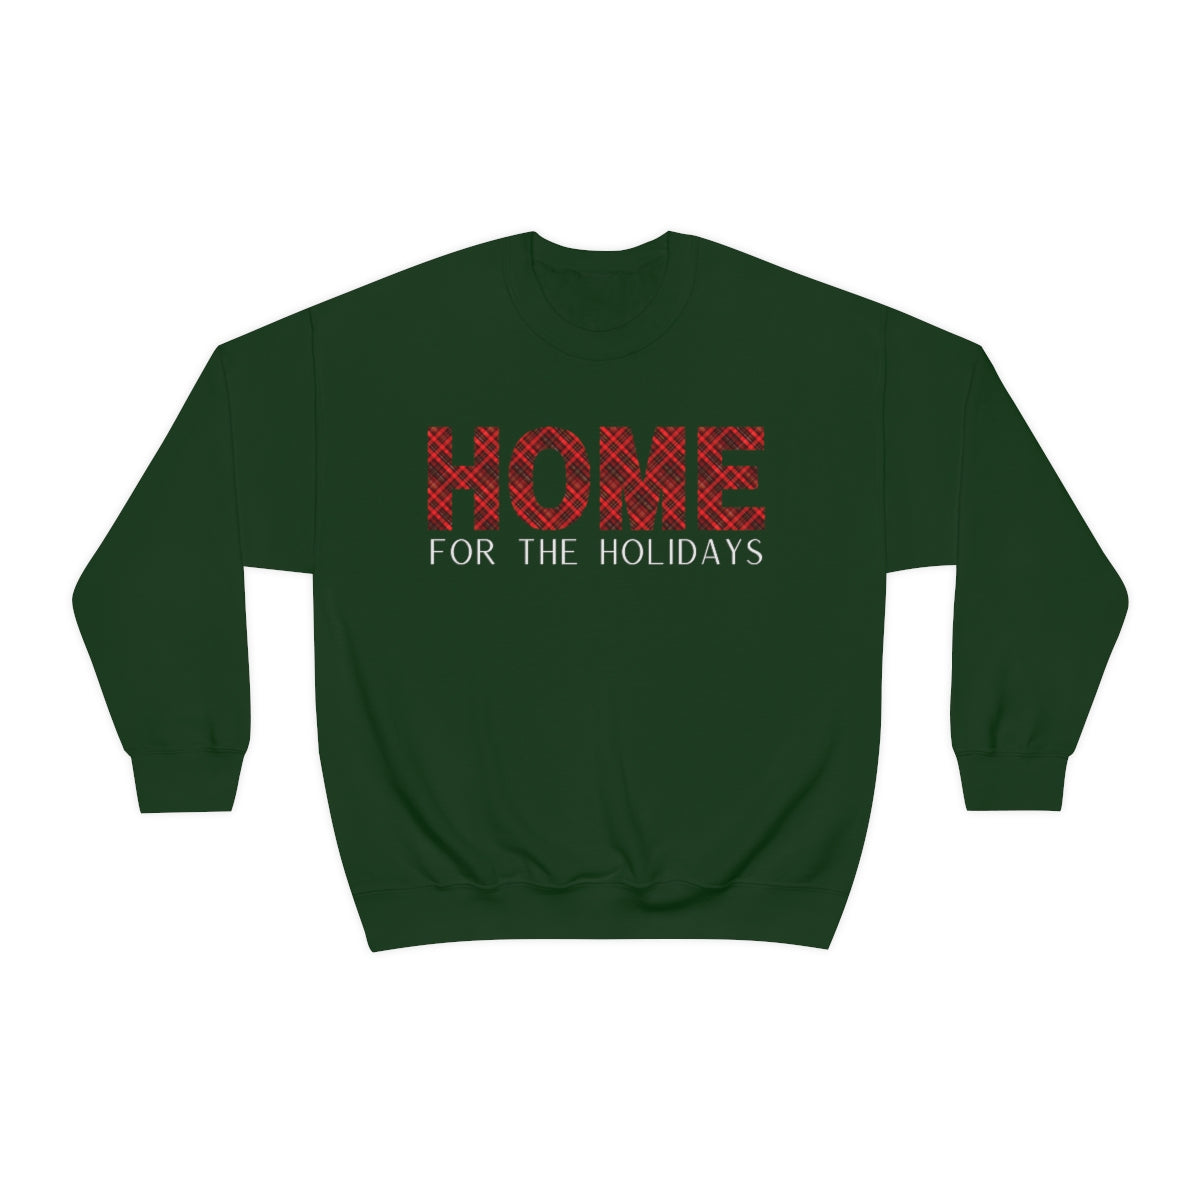 Home For the Holidays Christmas Sweatshirt, Plaid, Simple Text